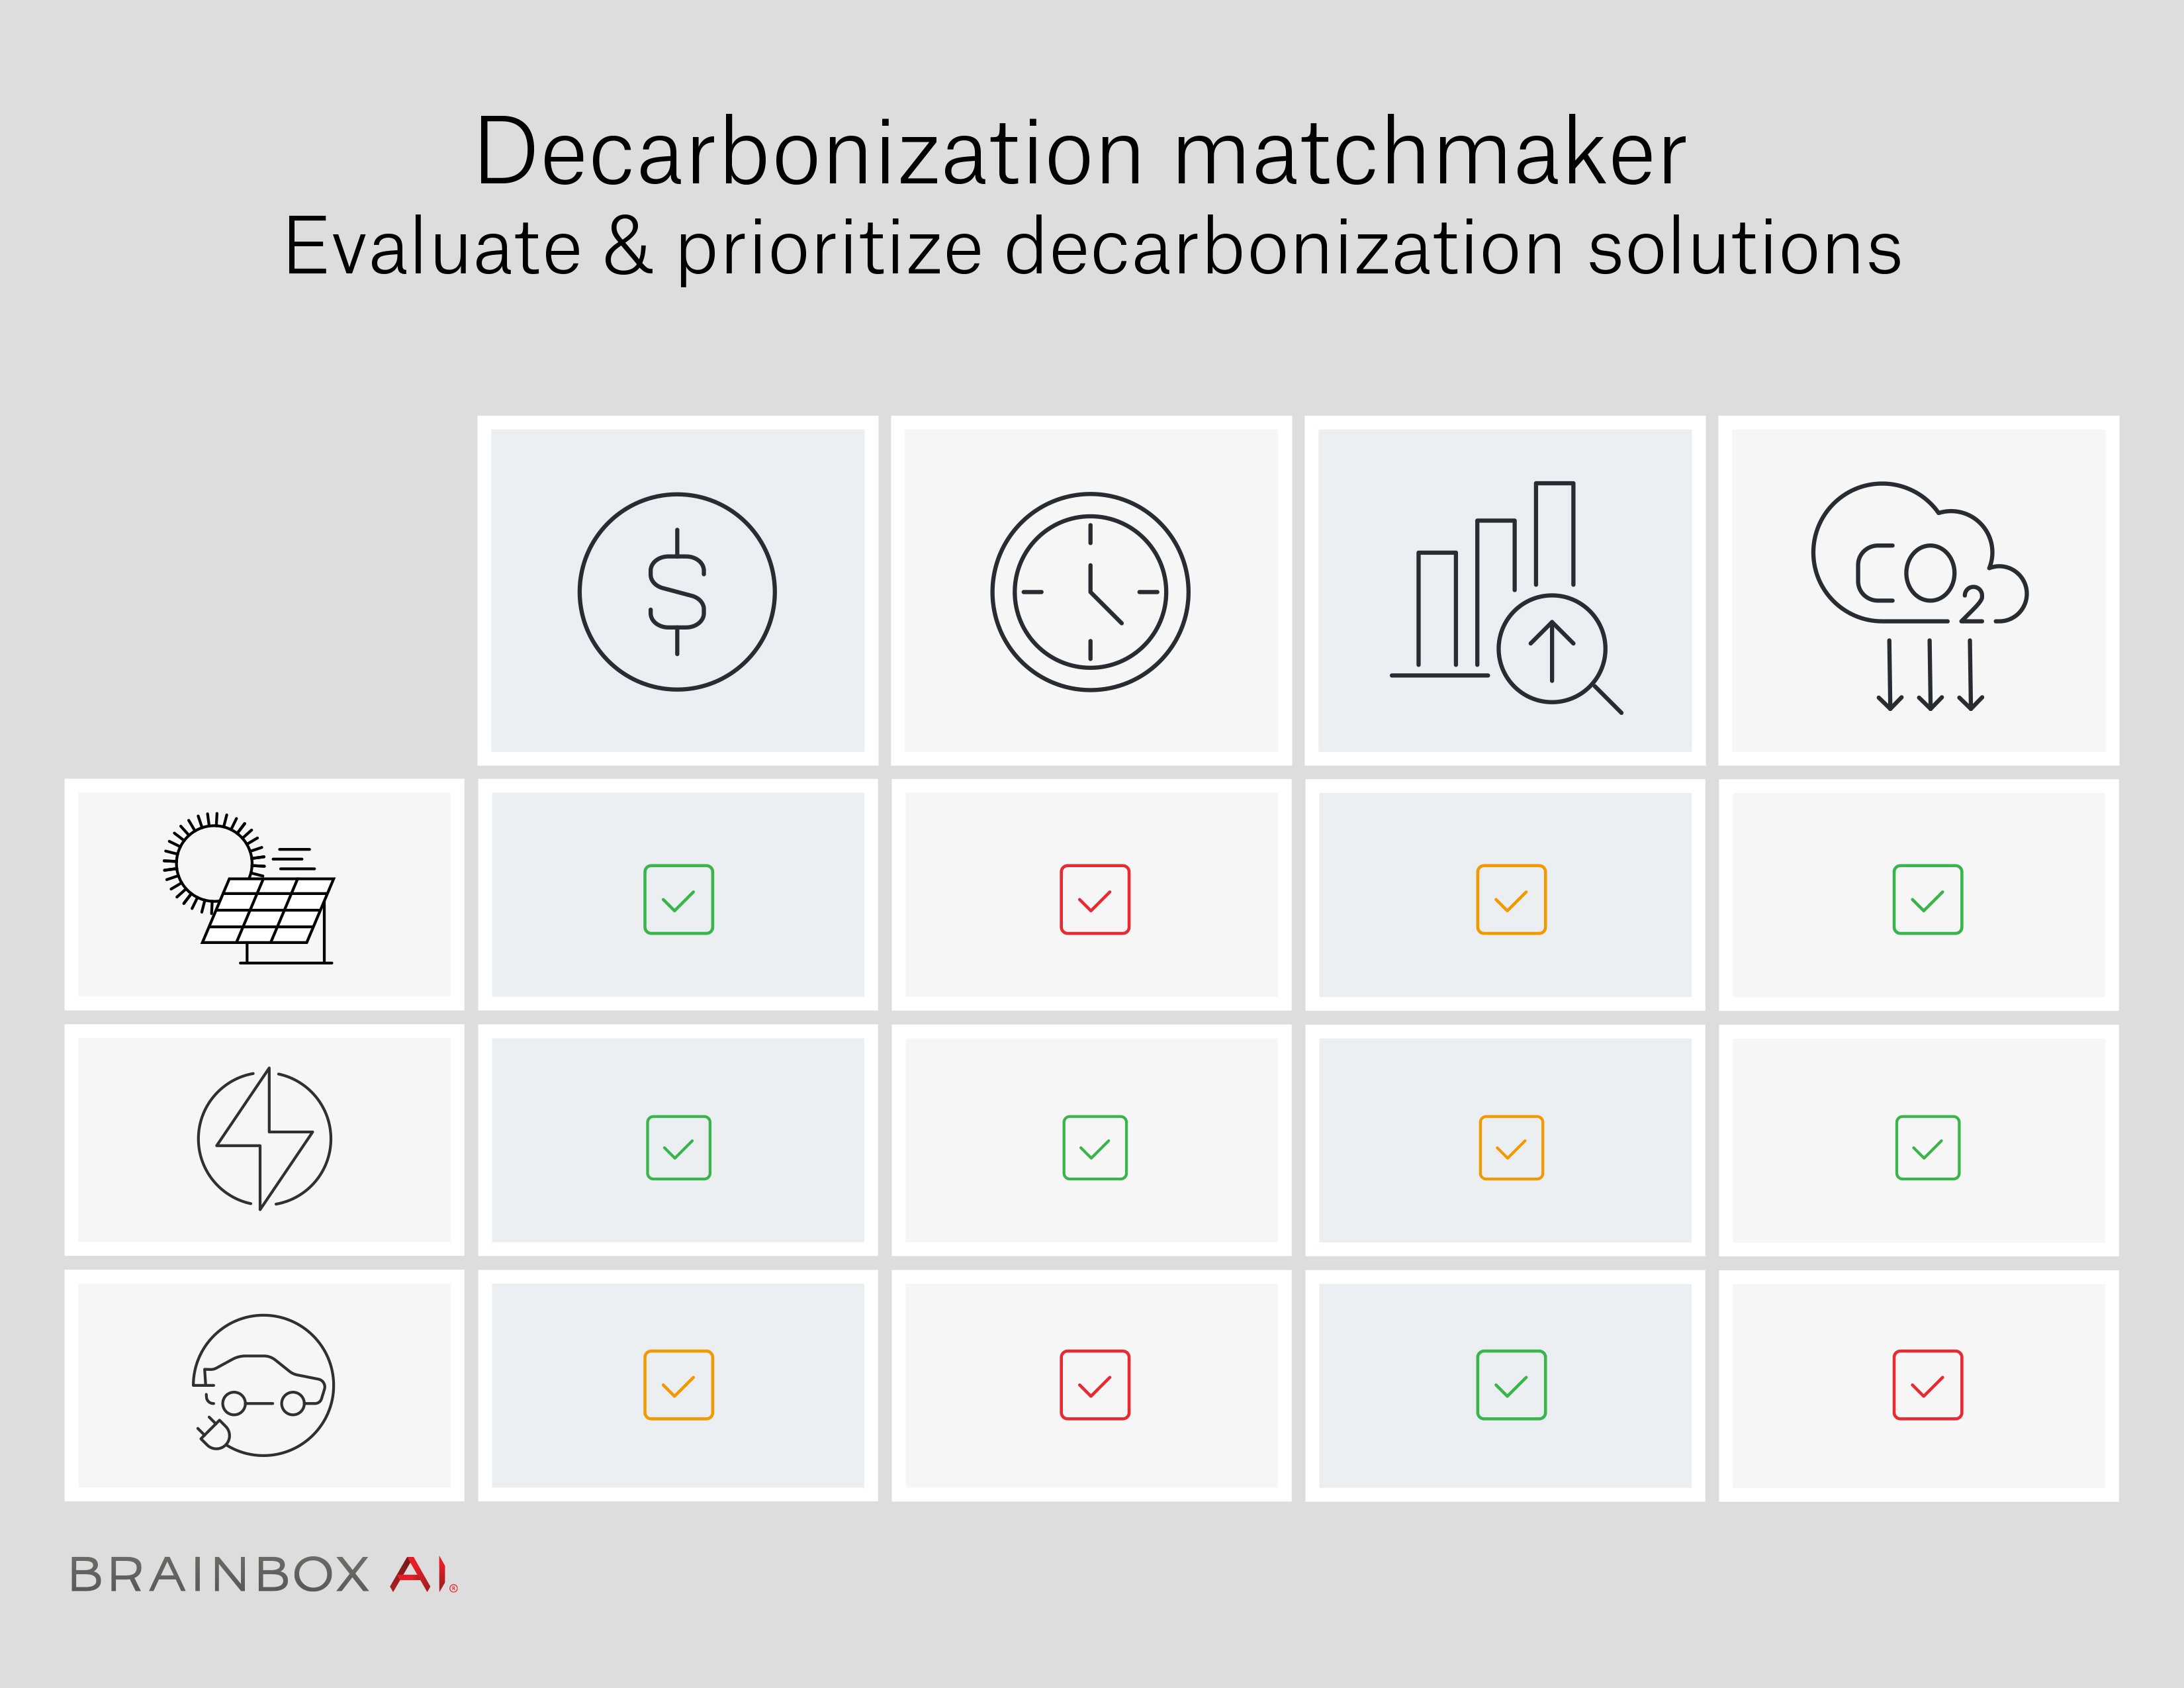 Decarbonization matchmaker